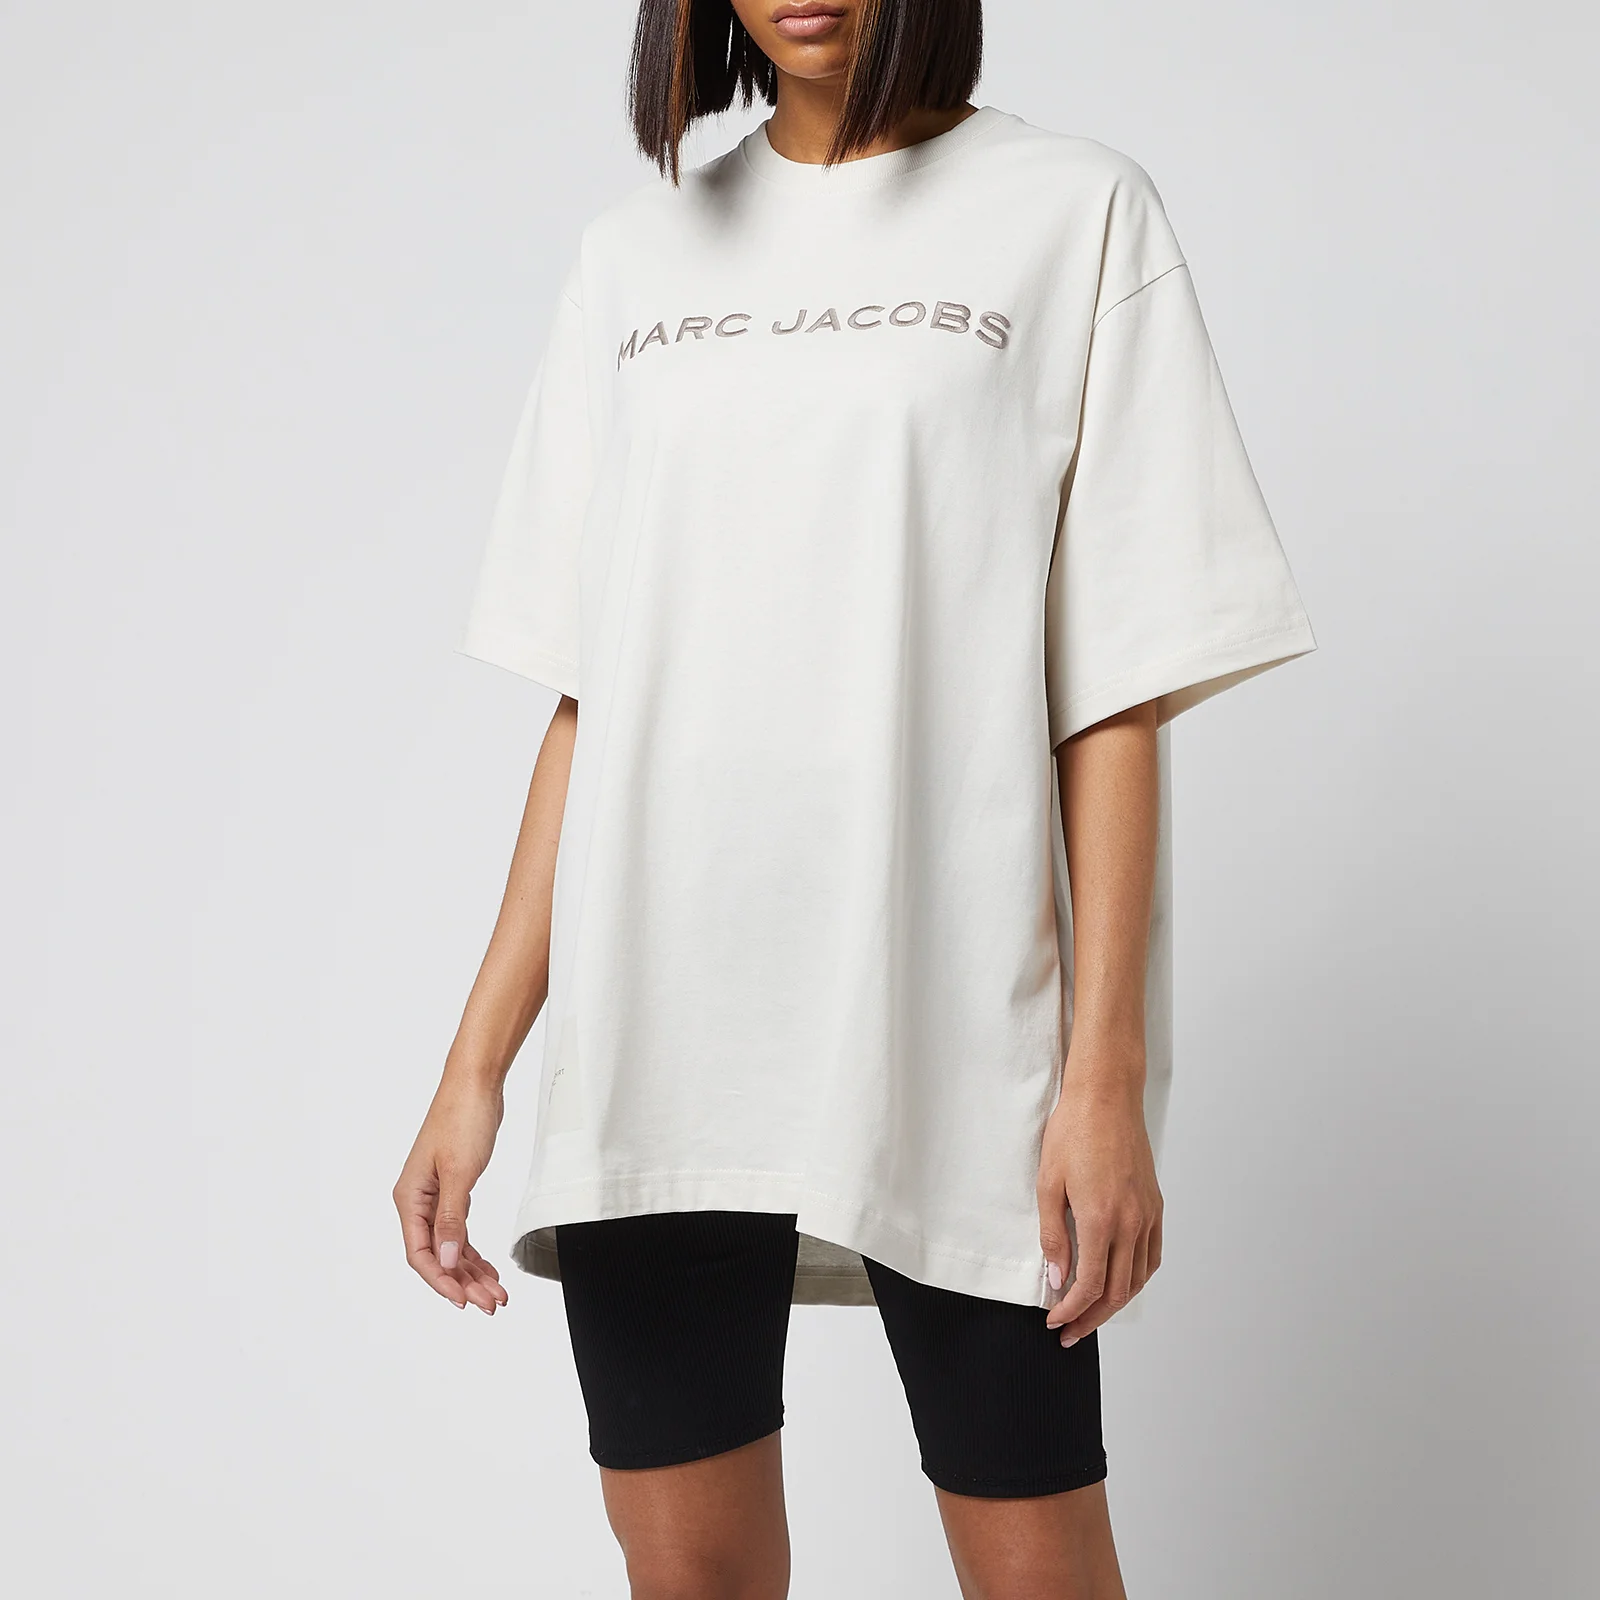 Marc Jacobs Women's The Big T-Shirt - Chalk Image 1